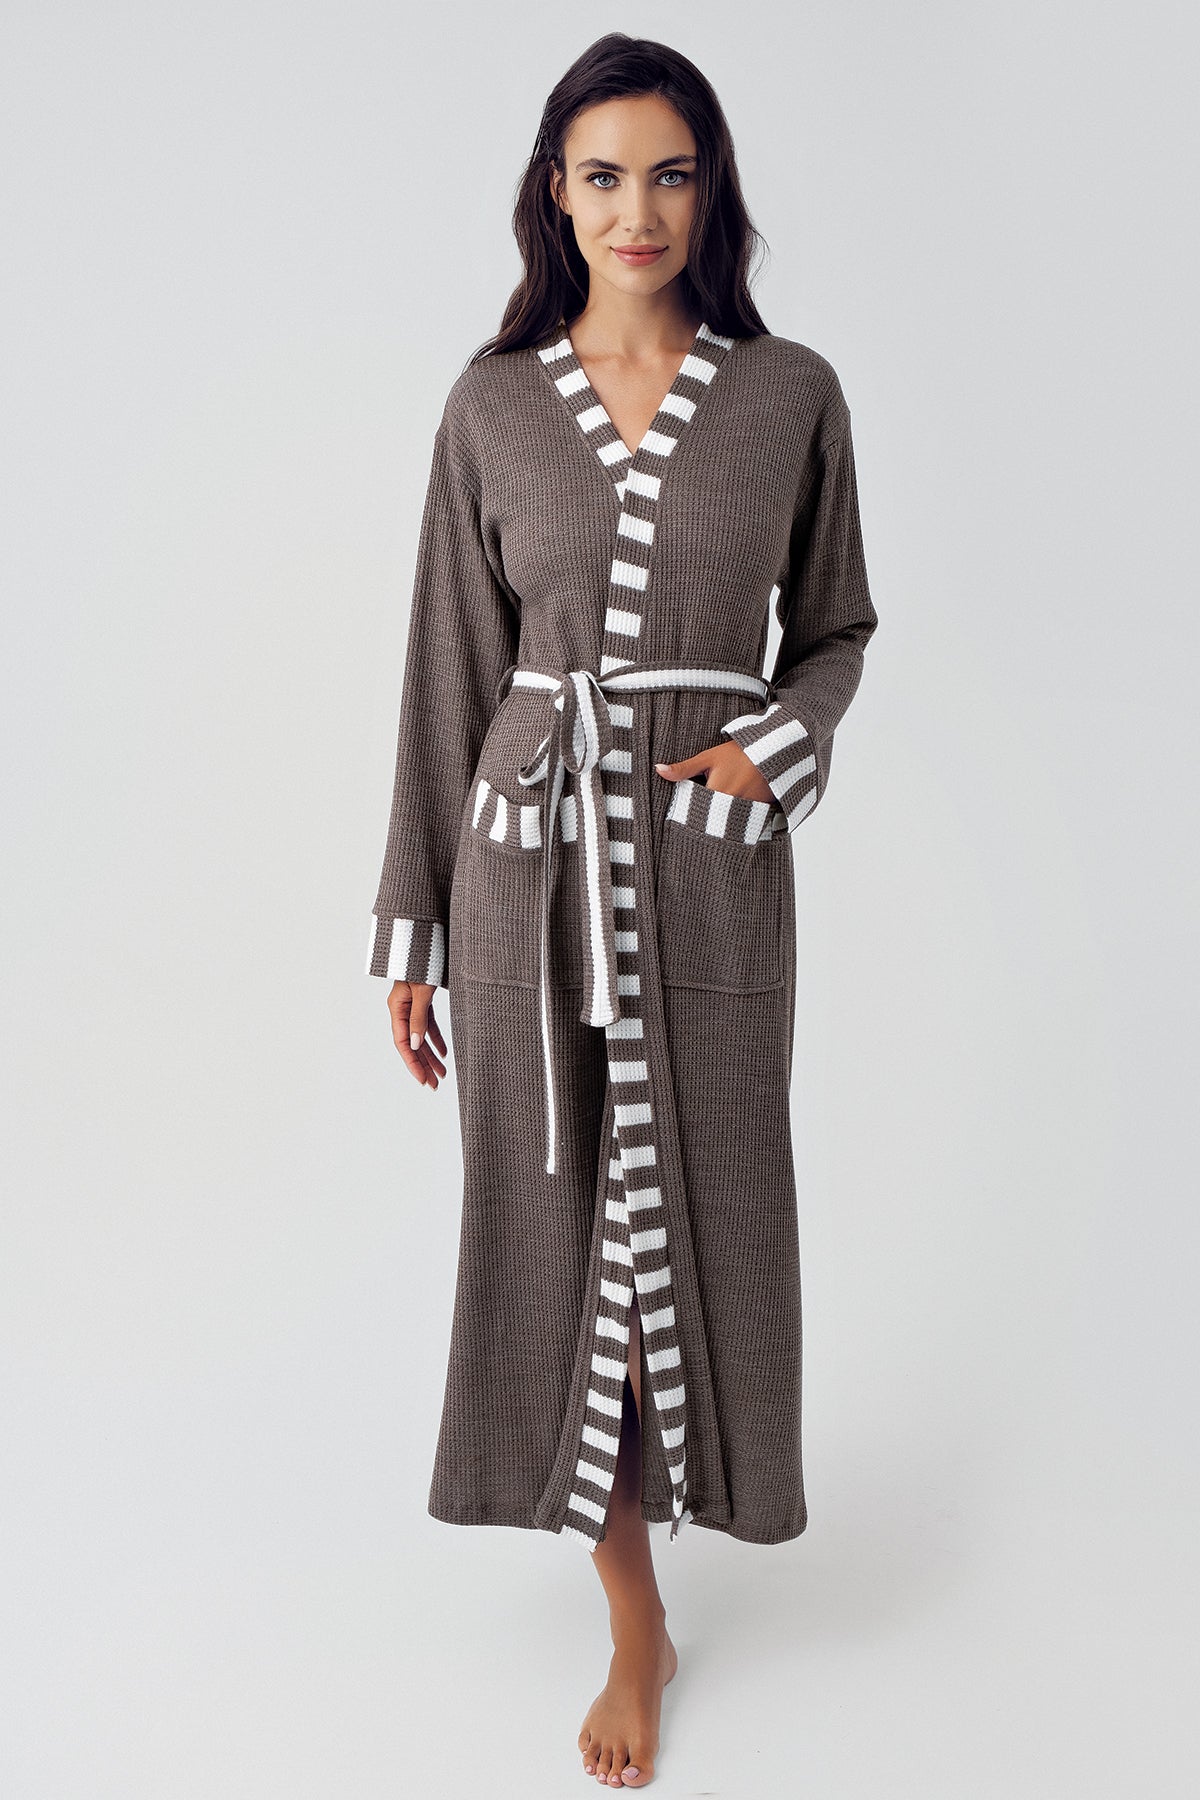 Shopymommy 15513 Knitwear Long Maternity Robe Coffee